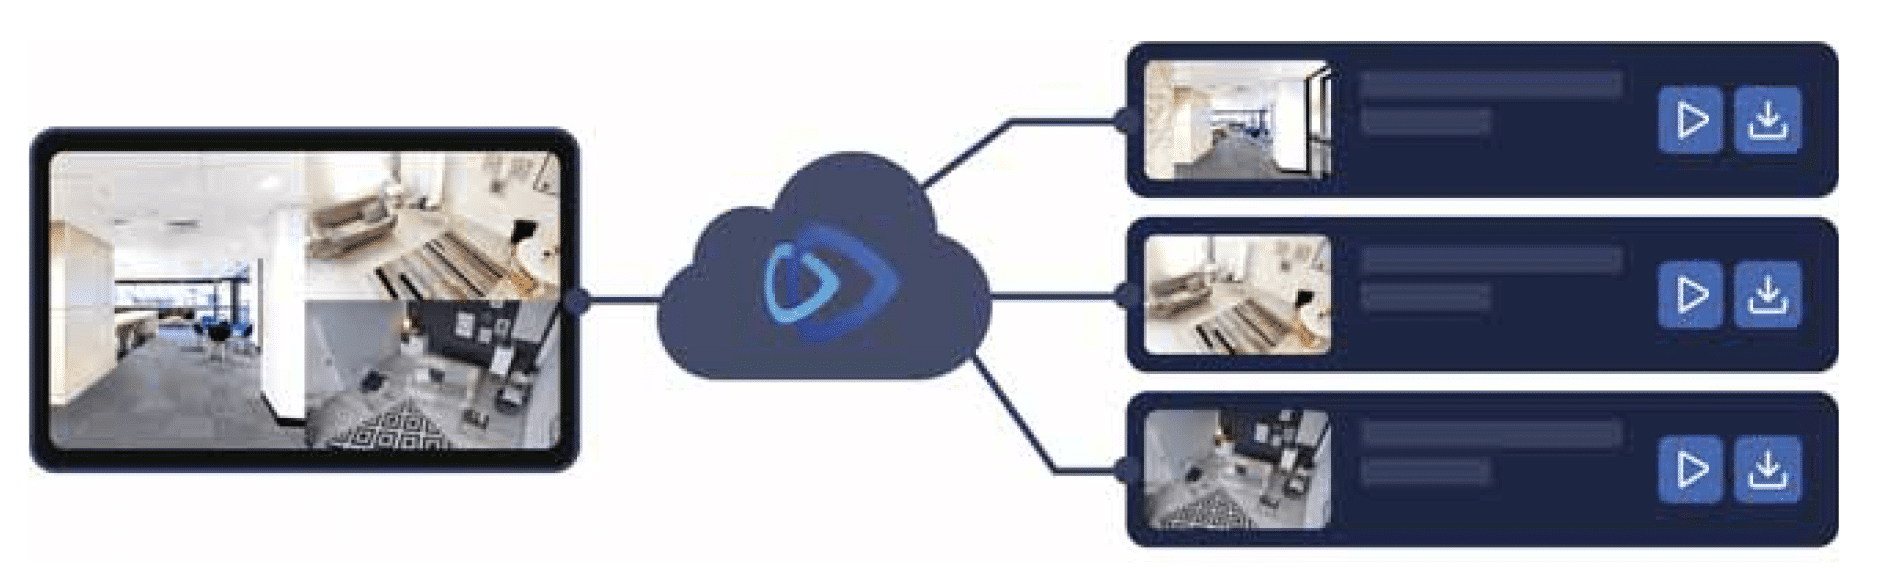 cloud backup security camera surveillance system